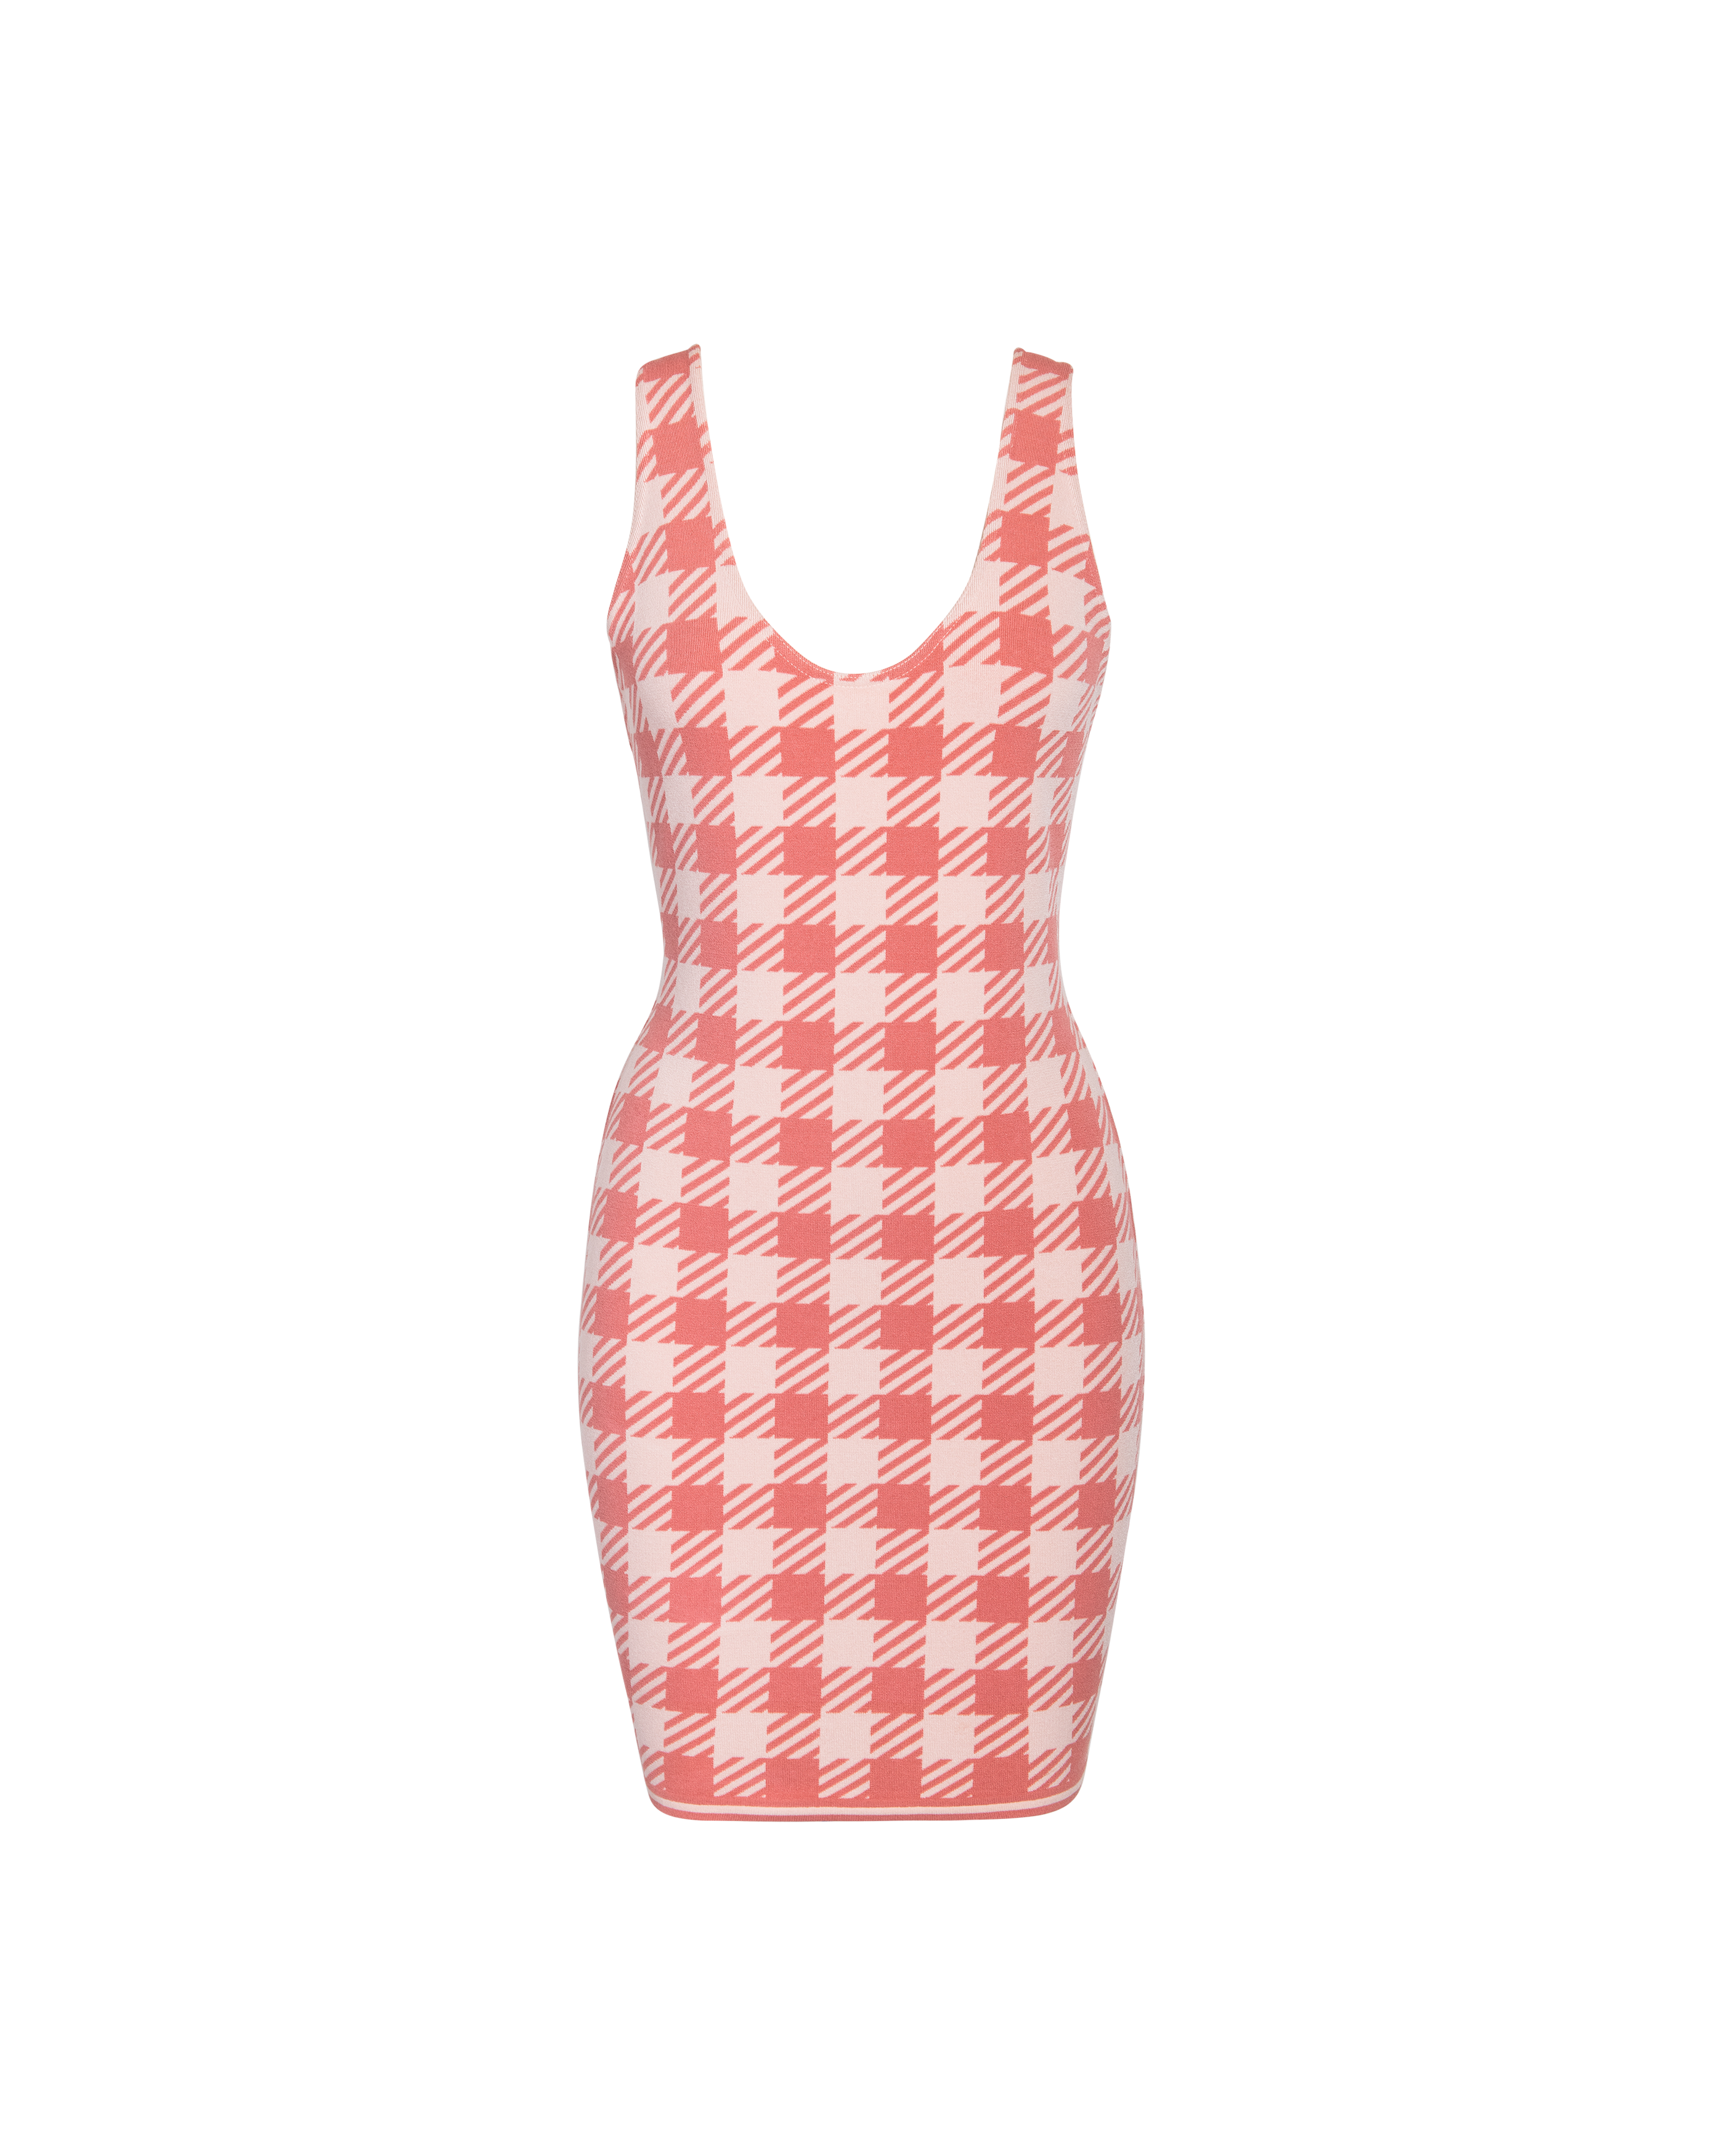 S/S 1991 ‘Tati’ Houndstooth Mini Dress